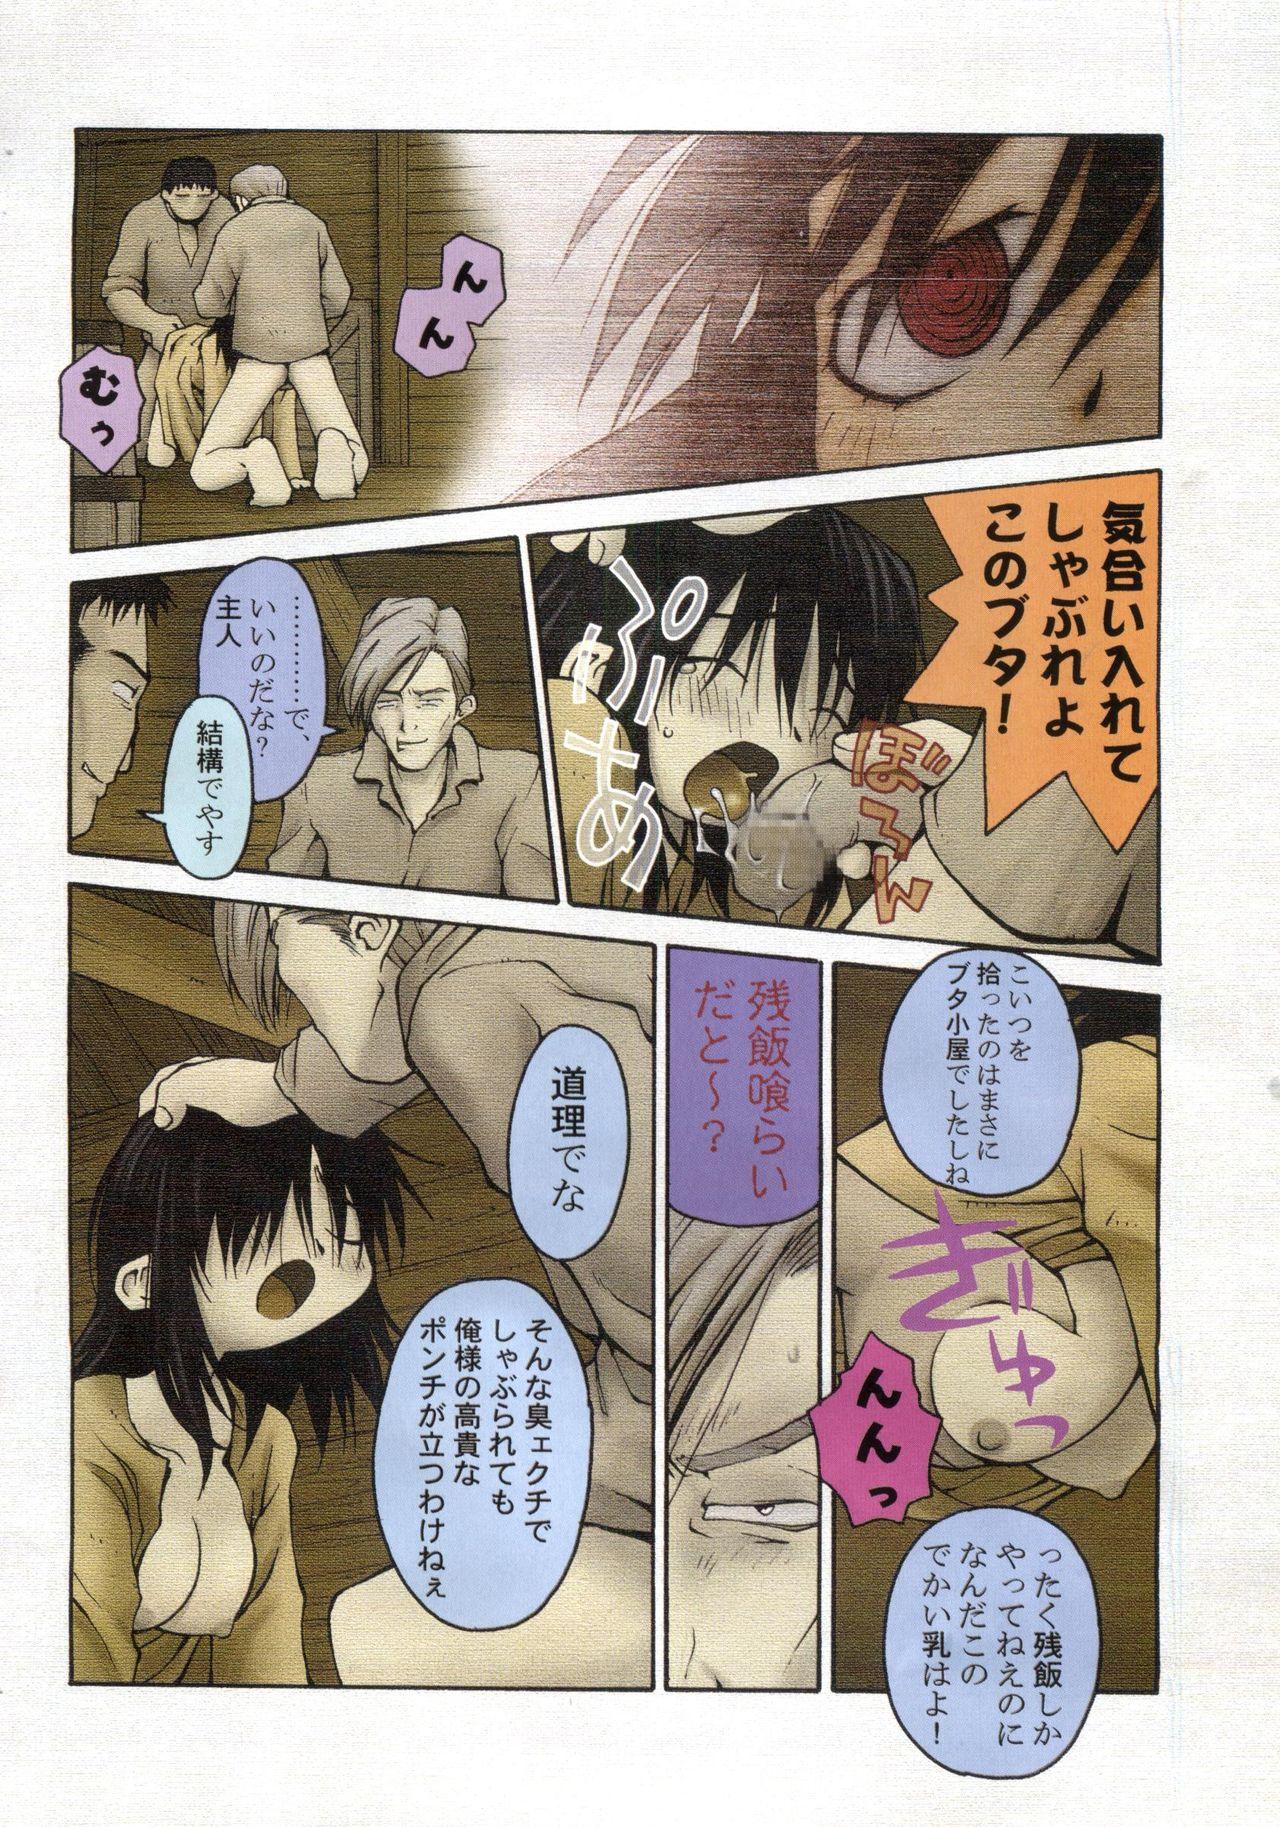 Ngentot Pai;kuu 1999 March Vol. 18 - Kare kano Mamotte shugogetten Uncensored - Page 5